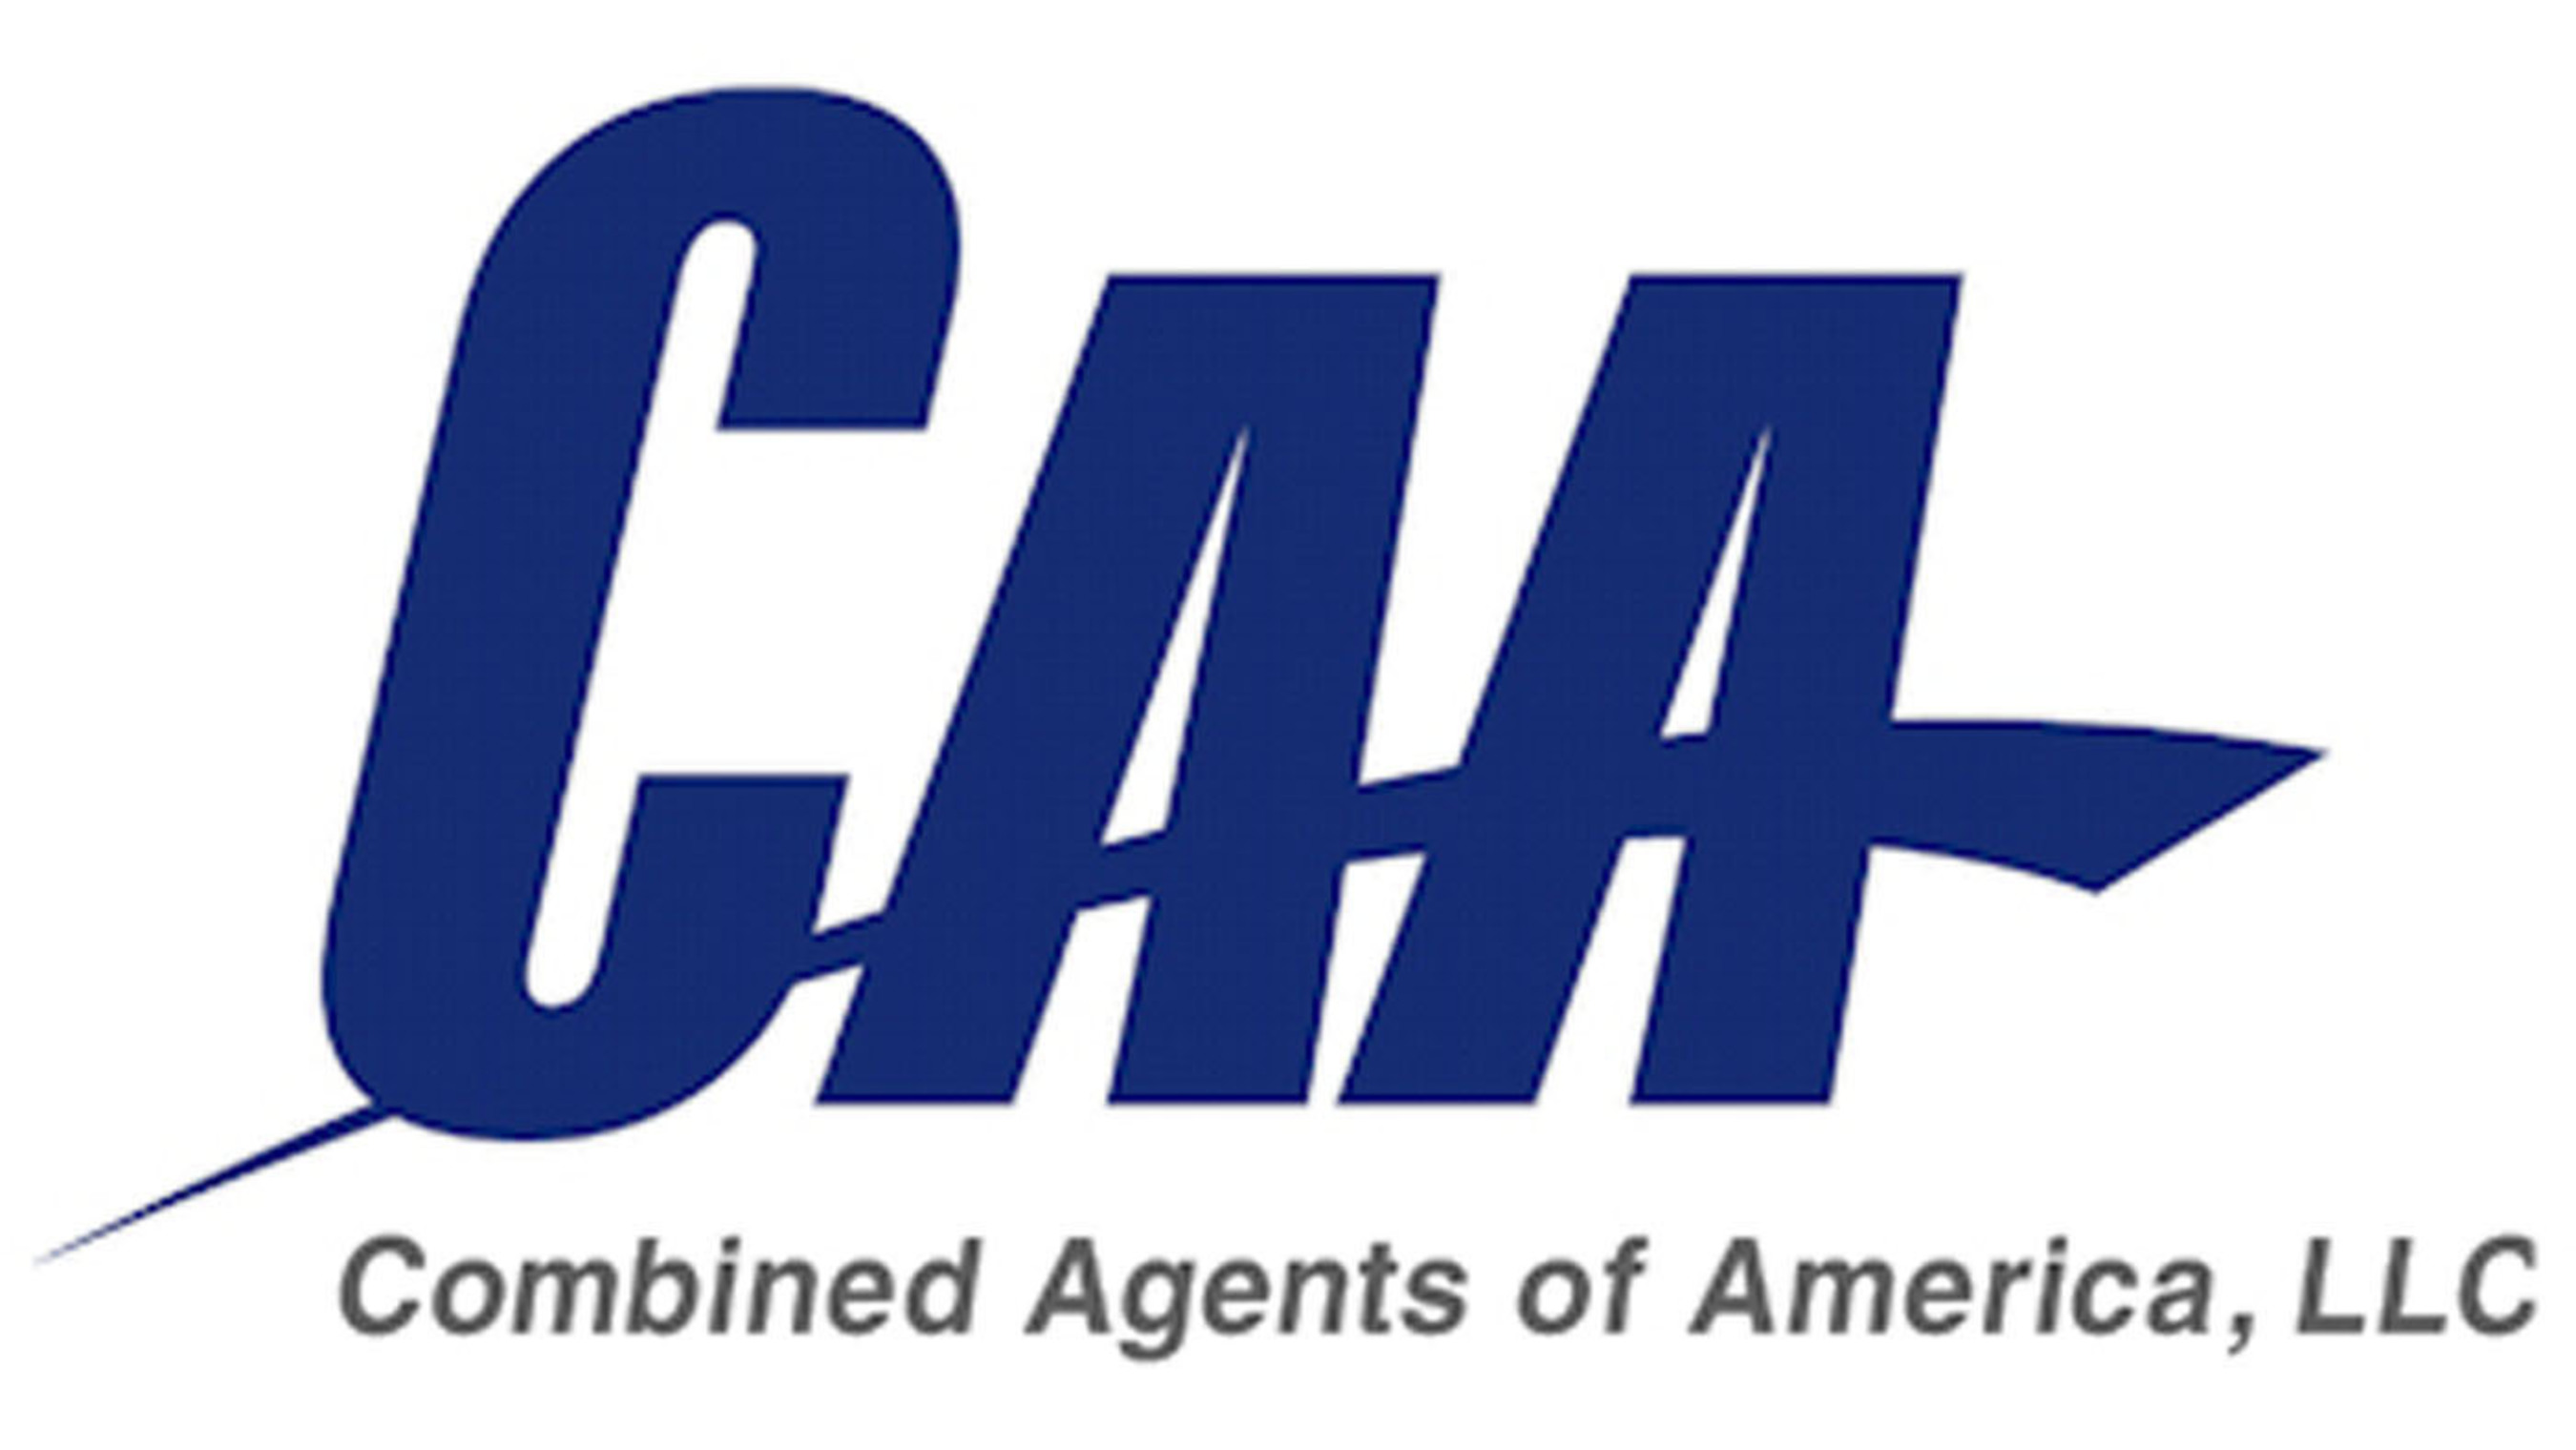 Combined Agents of America, LLC Logo. (PRNewsFoto/Combined Agents of America, LLC) (PRNewsFoto/)